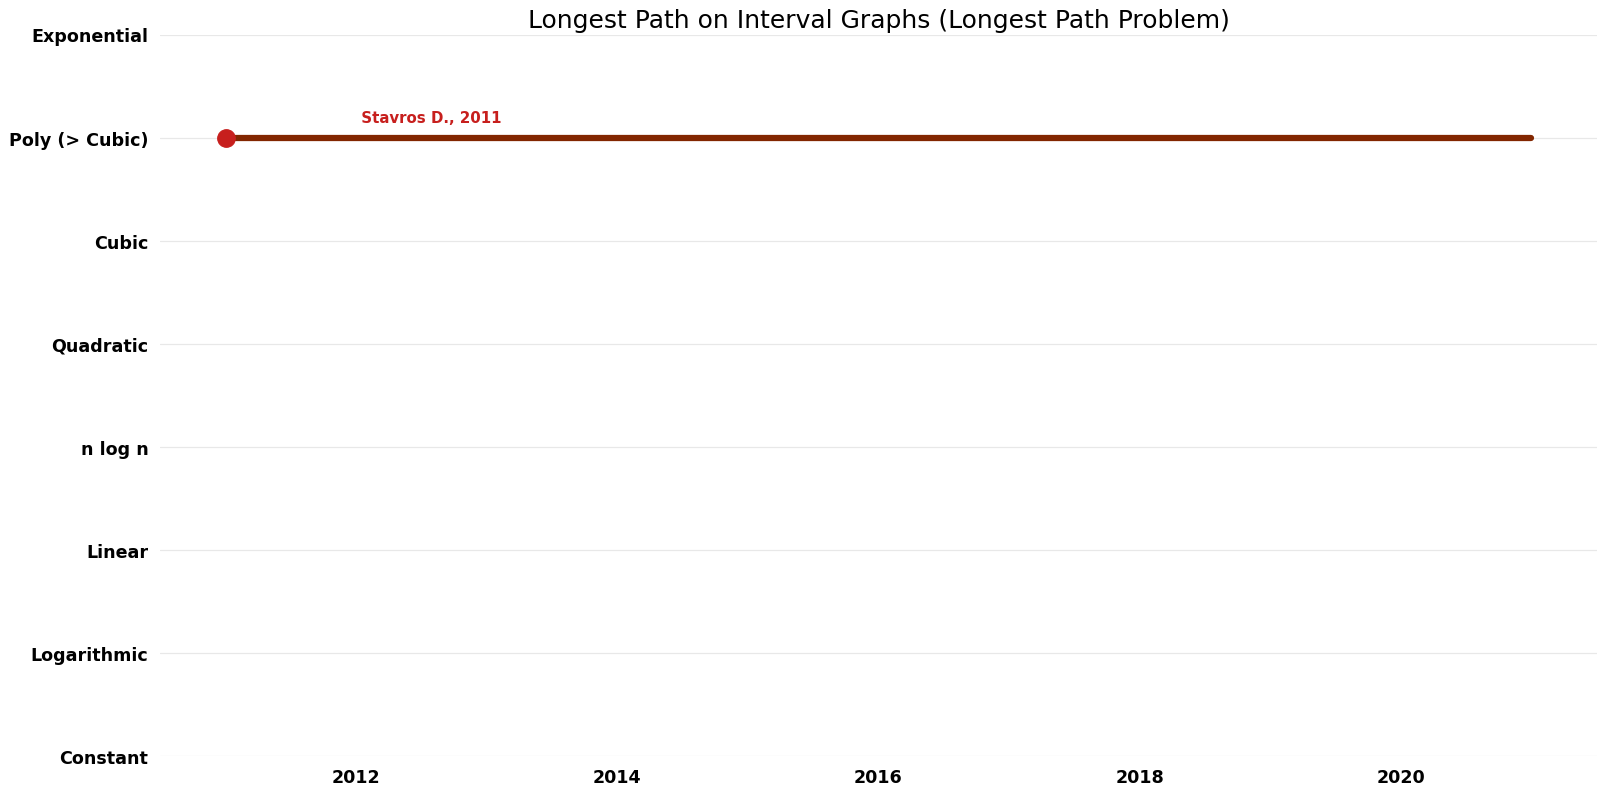 File:Longest Path Problem - Longest Path on Interval Graphs - Time.png